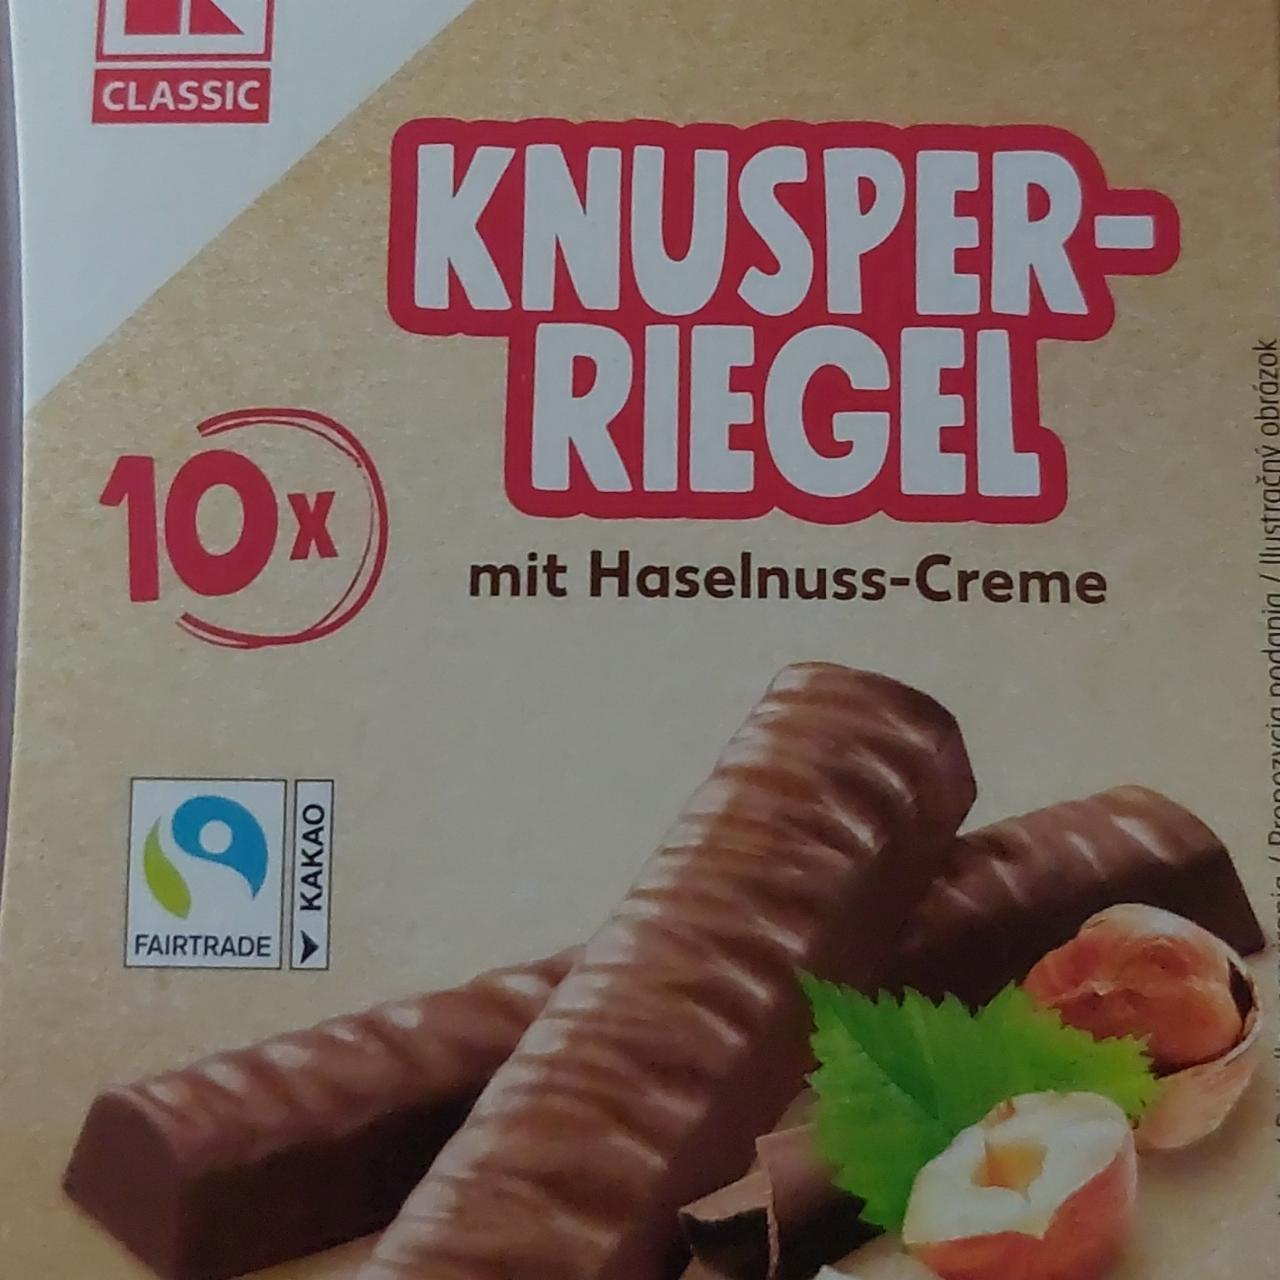 Zdjęcia - Knusper-Riegel mit Haselnuss-Creme K-Classic